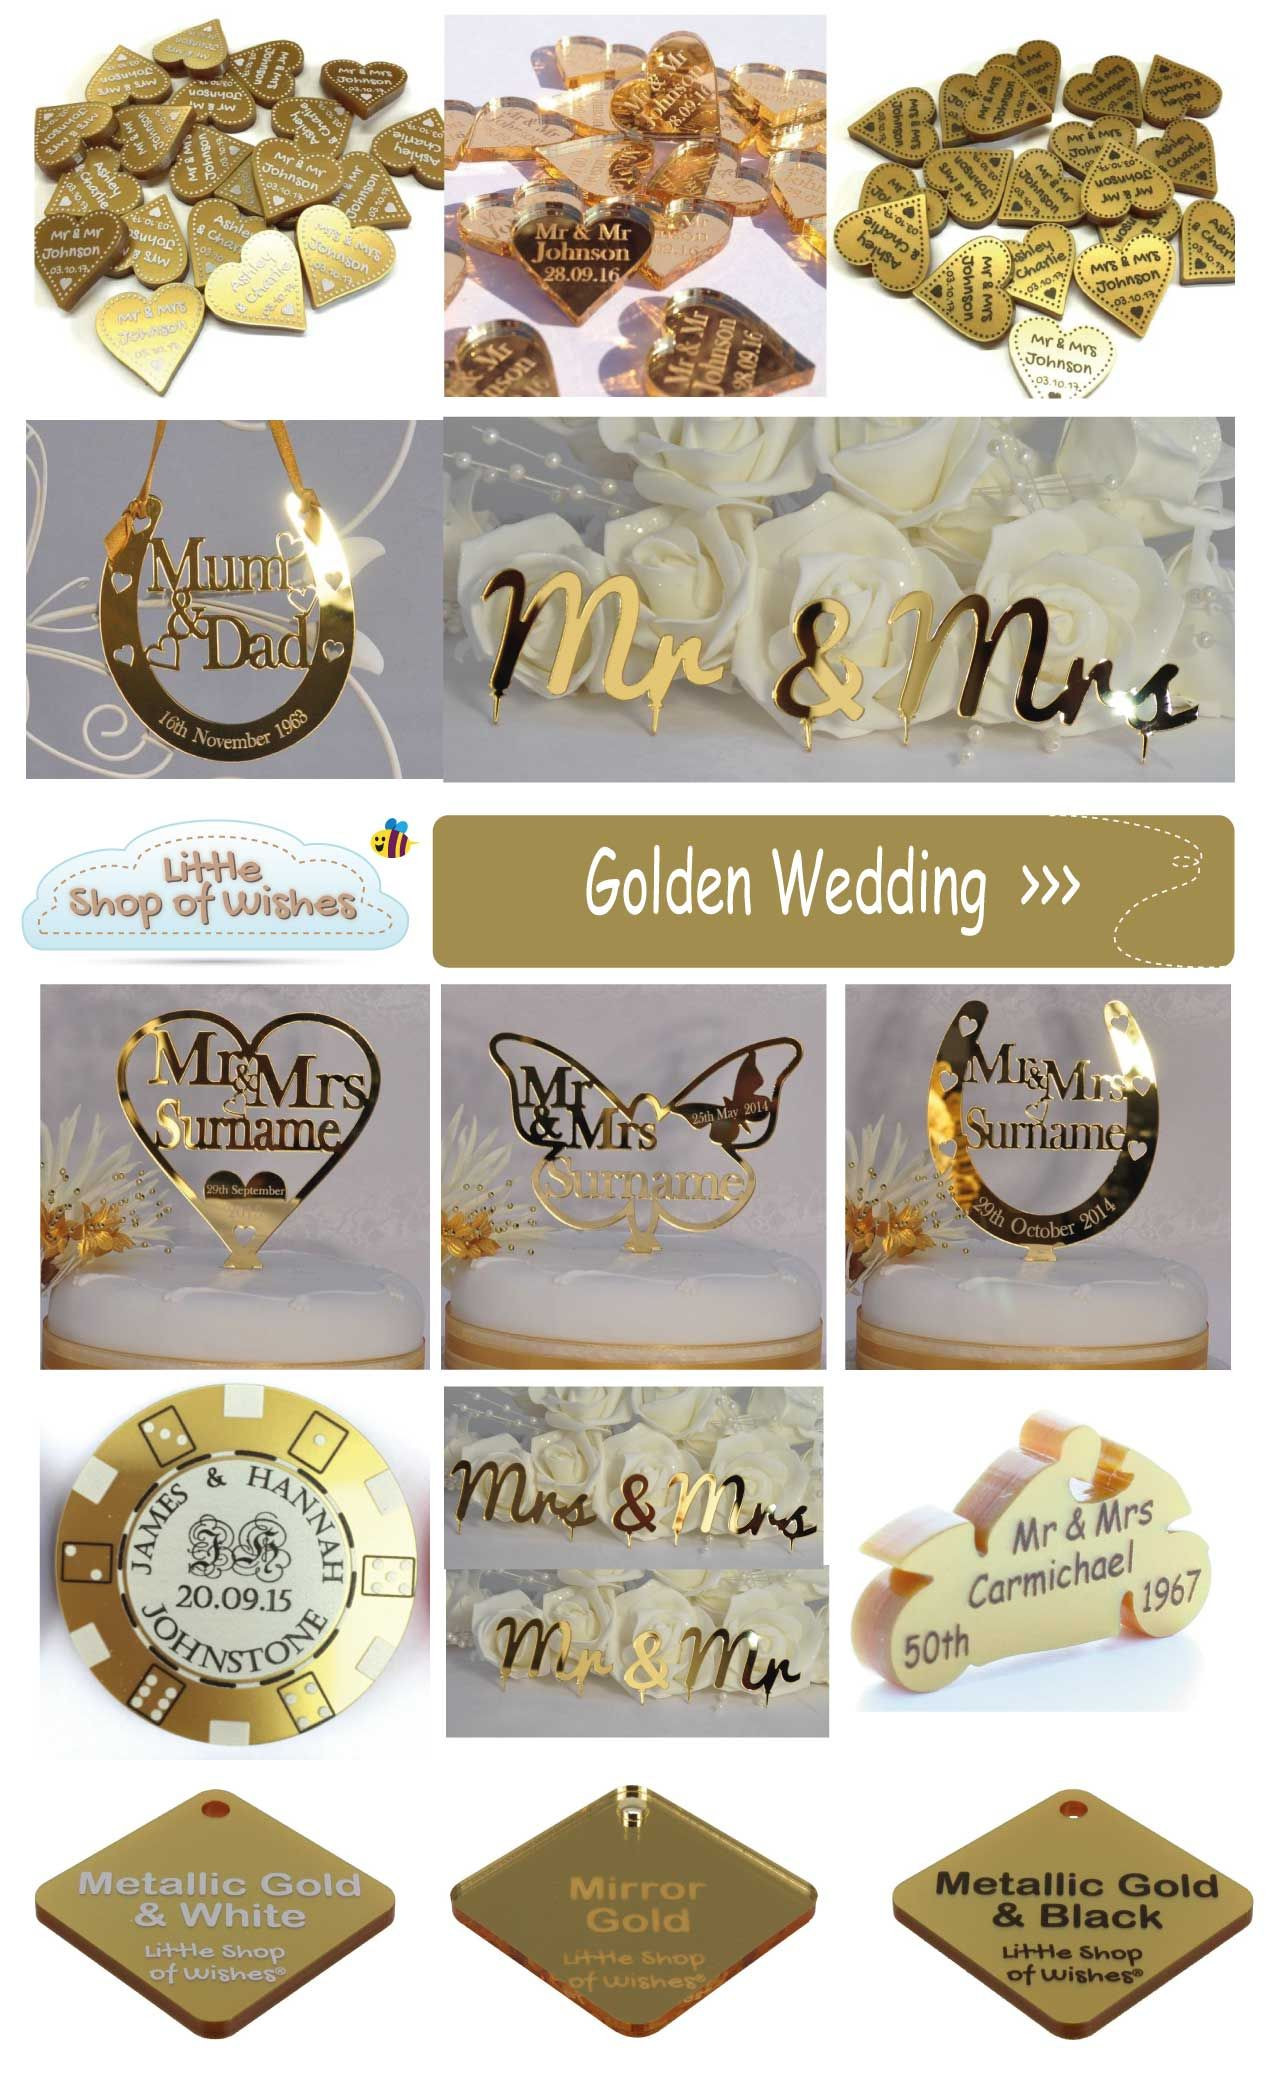 Golden Wedding Anniversary Gift Ideas For Parents
 50th Golden Wedding Anniversary Gift ideas for your